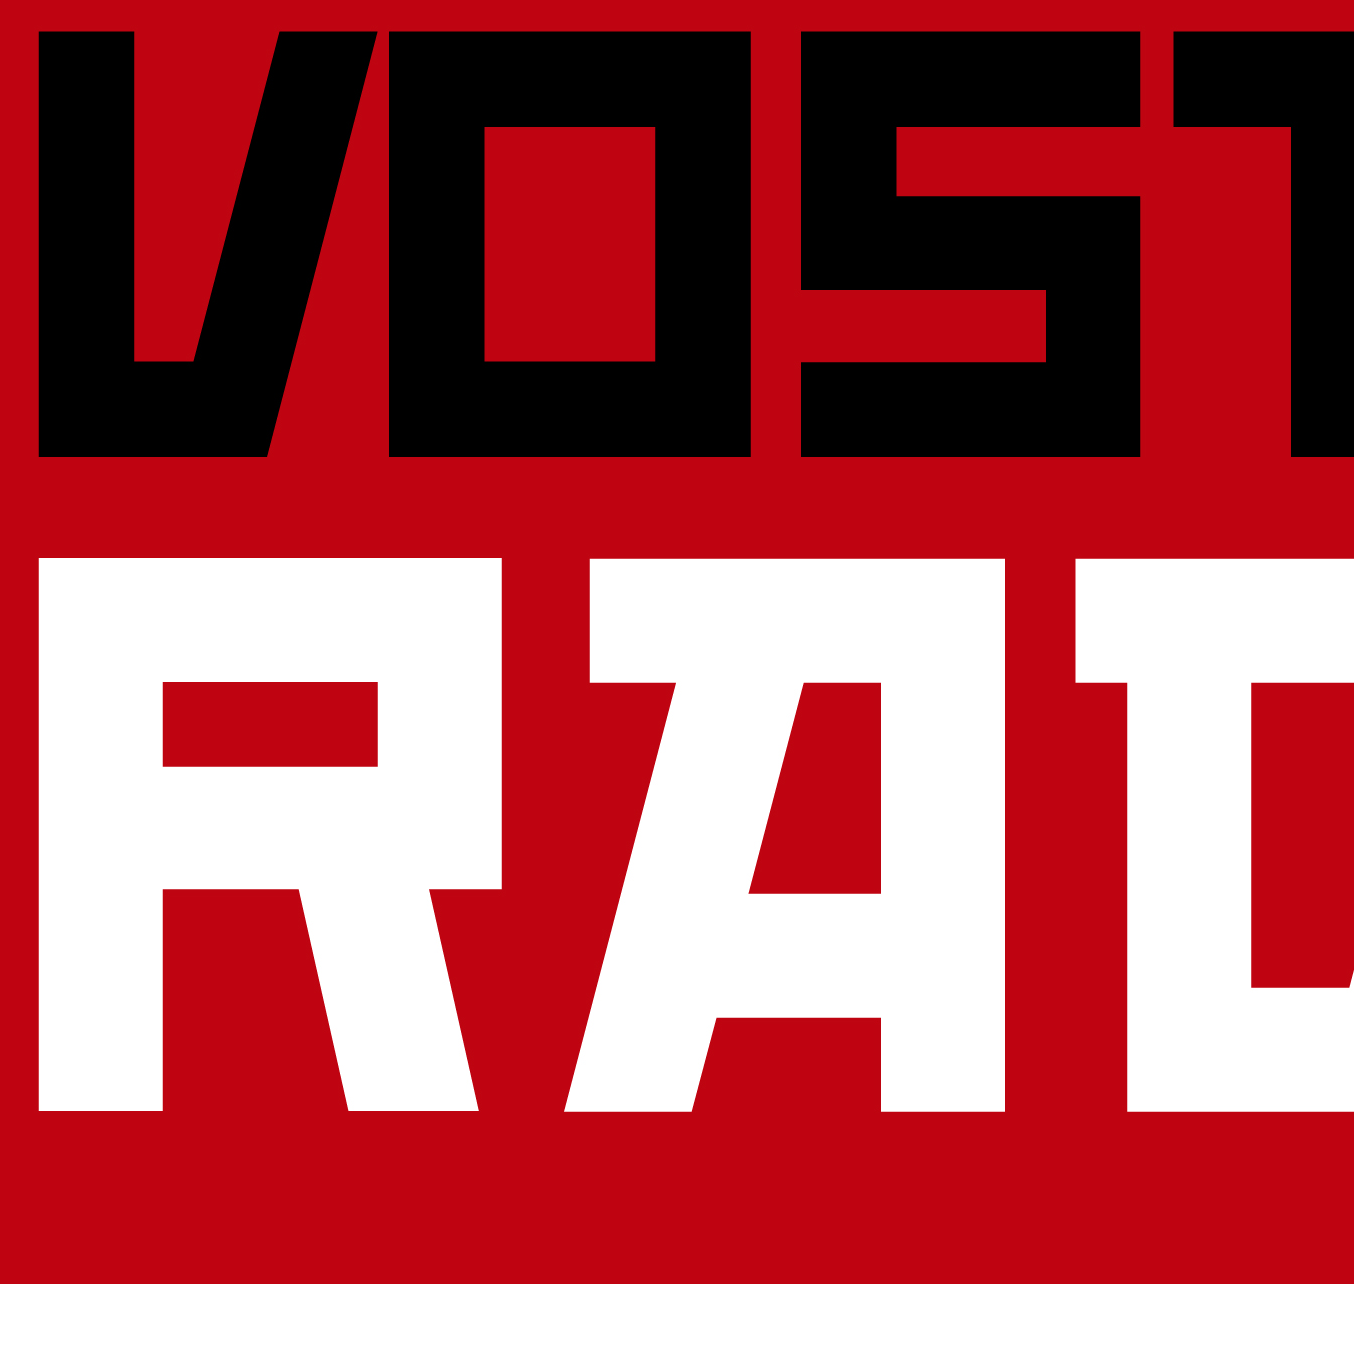 Radio Vostok